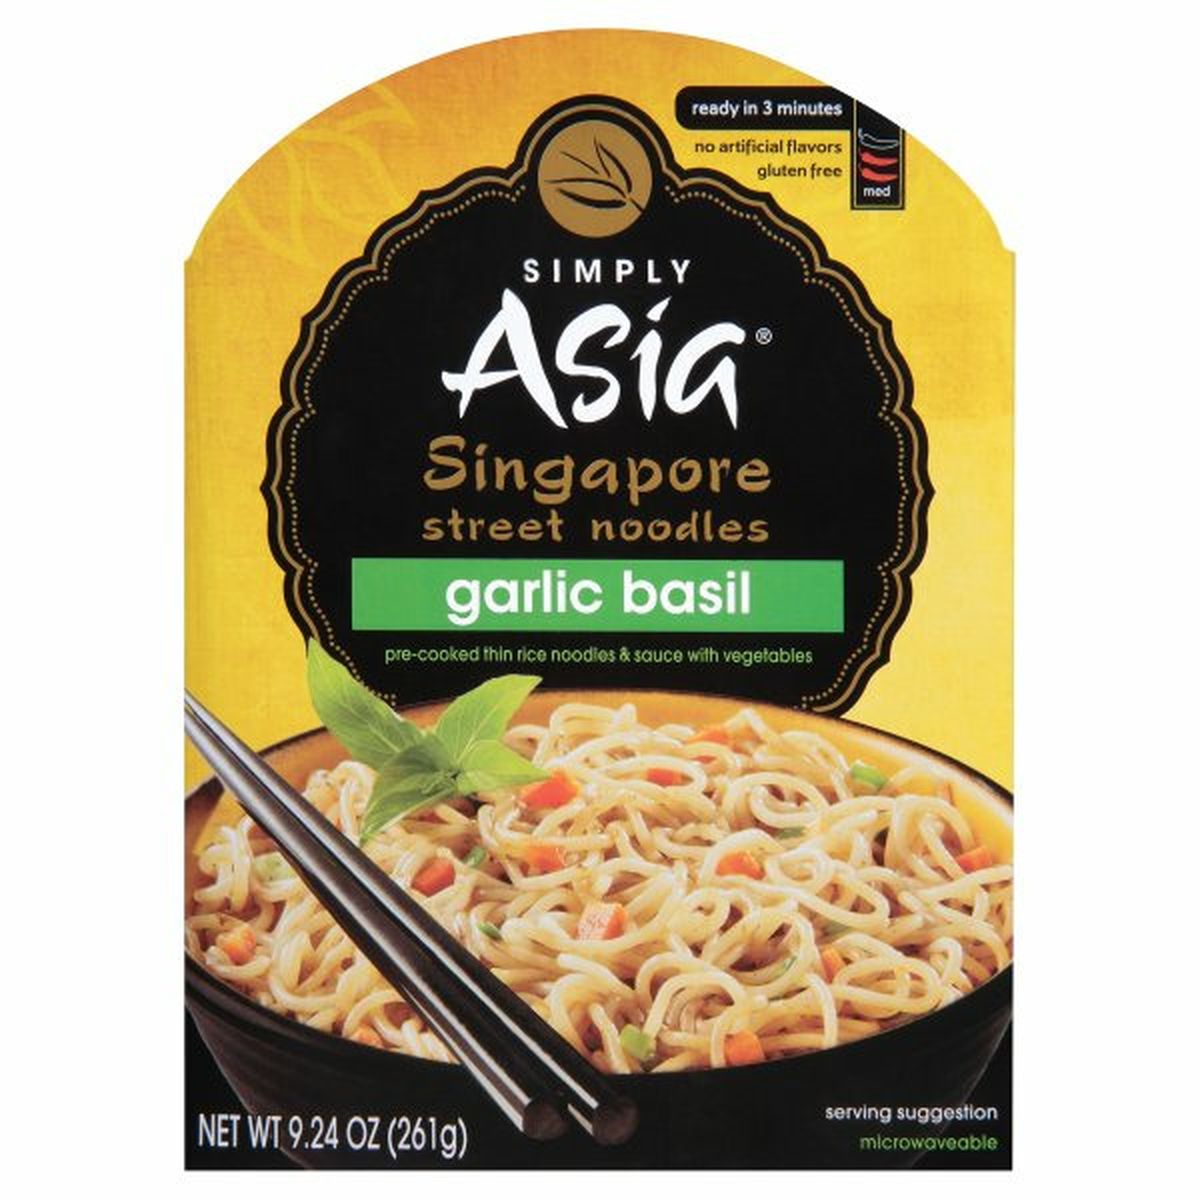 Calories in Simply Asias  Garlic Basil Singapore Street Noodles